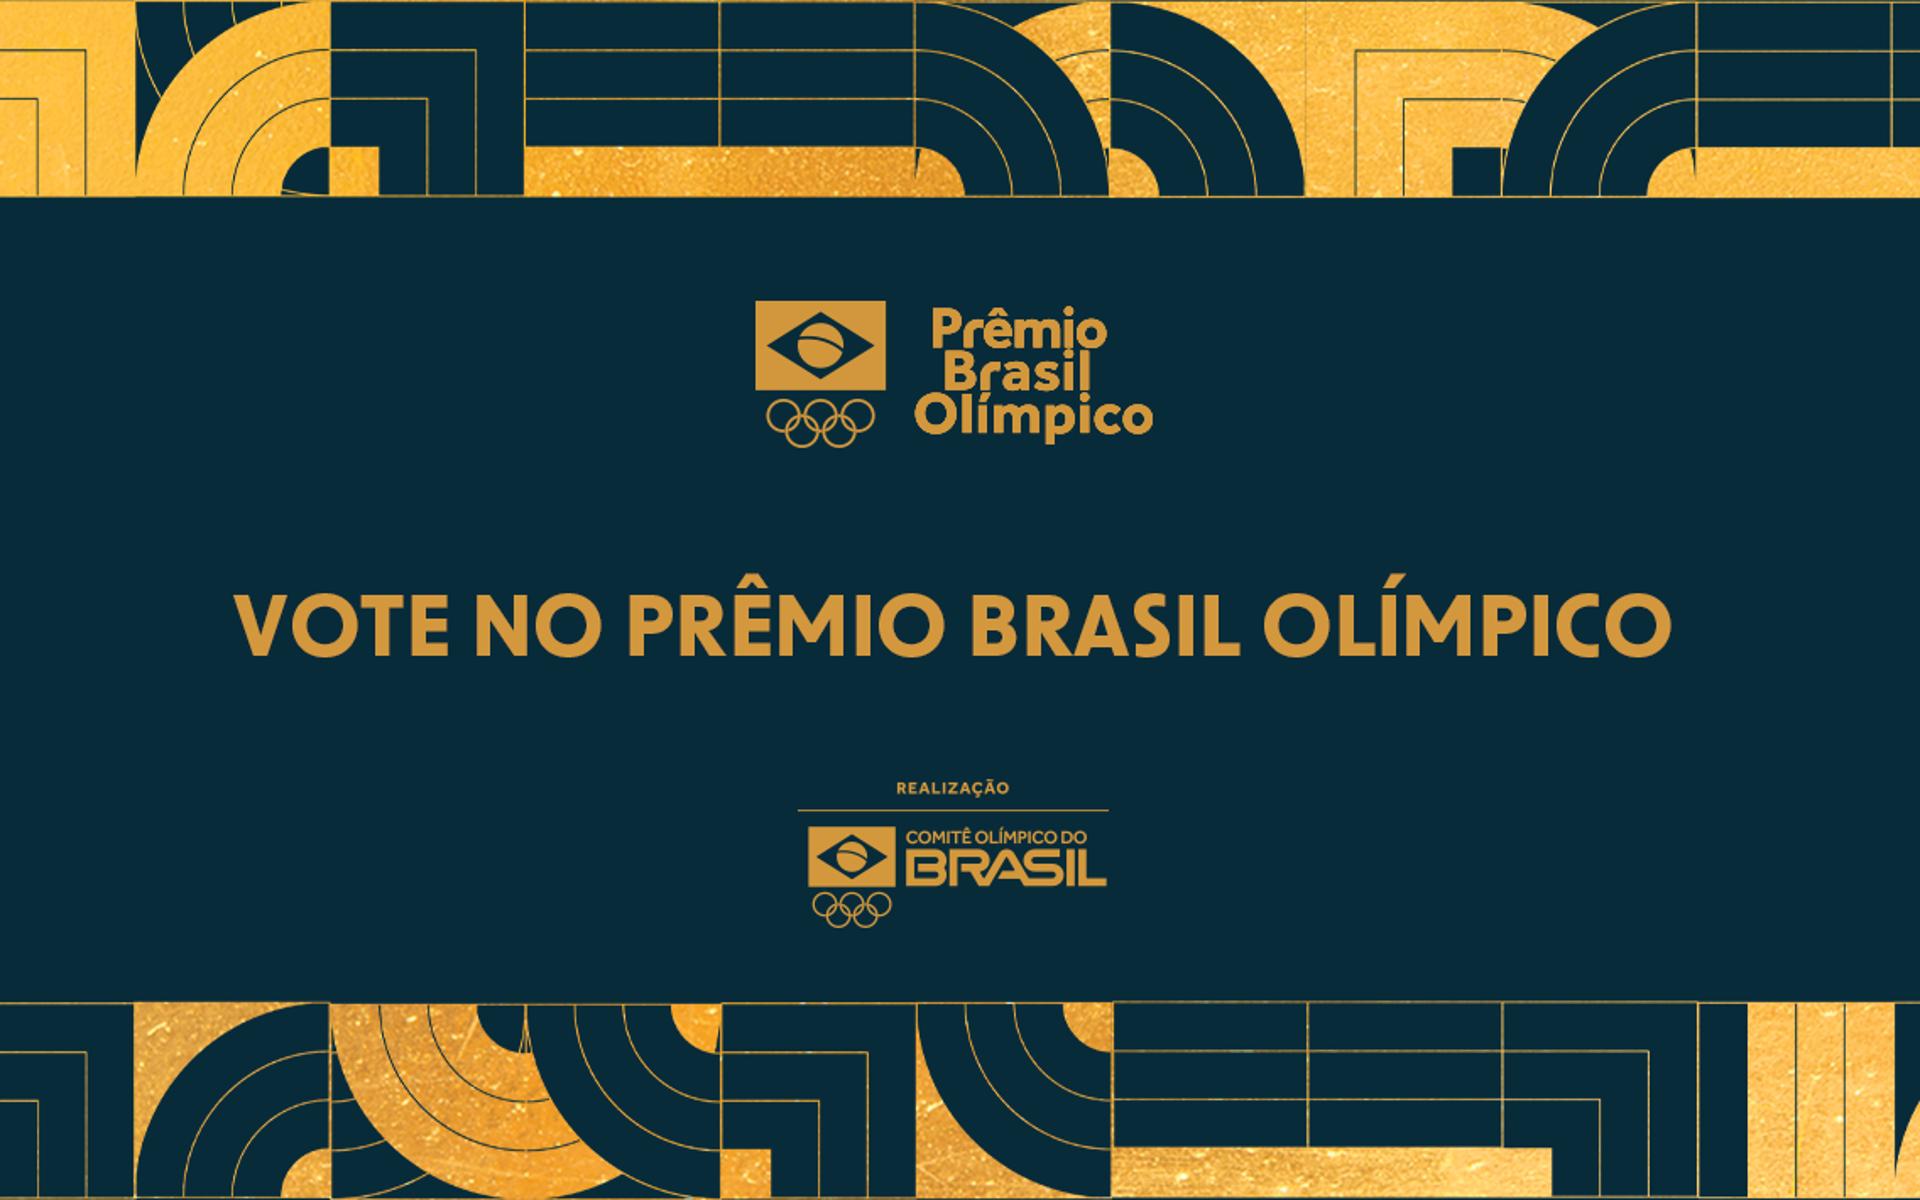 Premio-Brasil-Olimpico-aspect-ratio-512-320